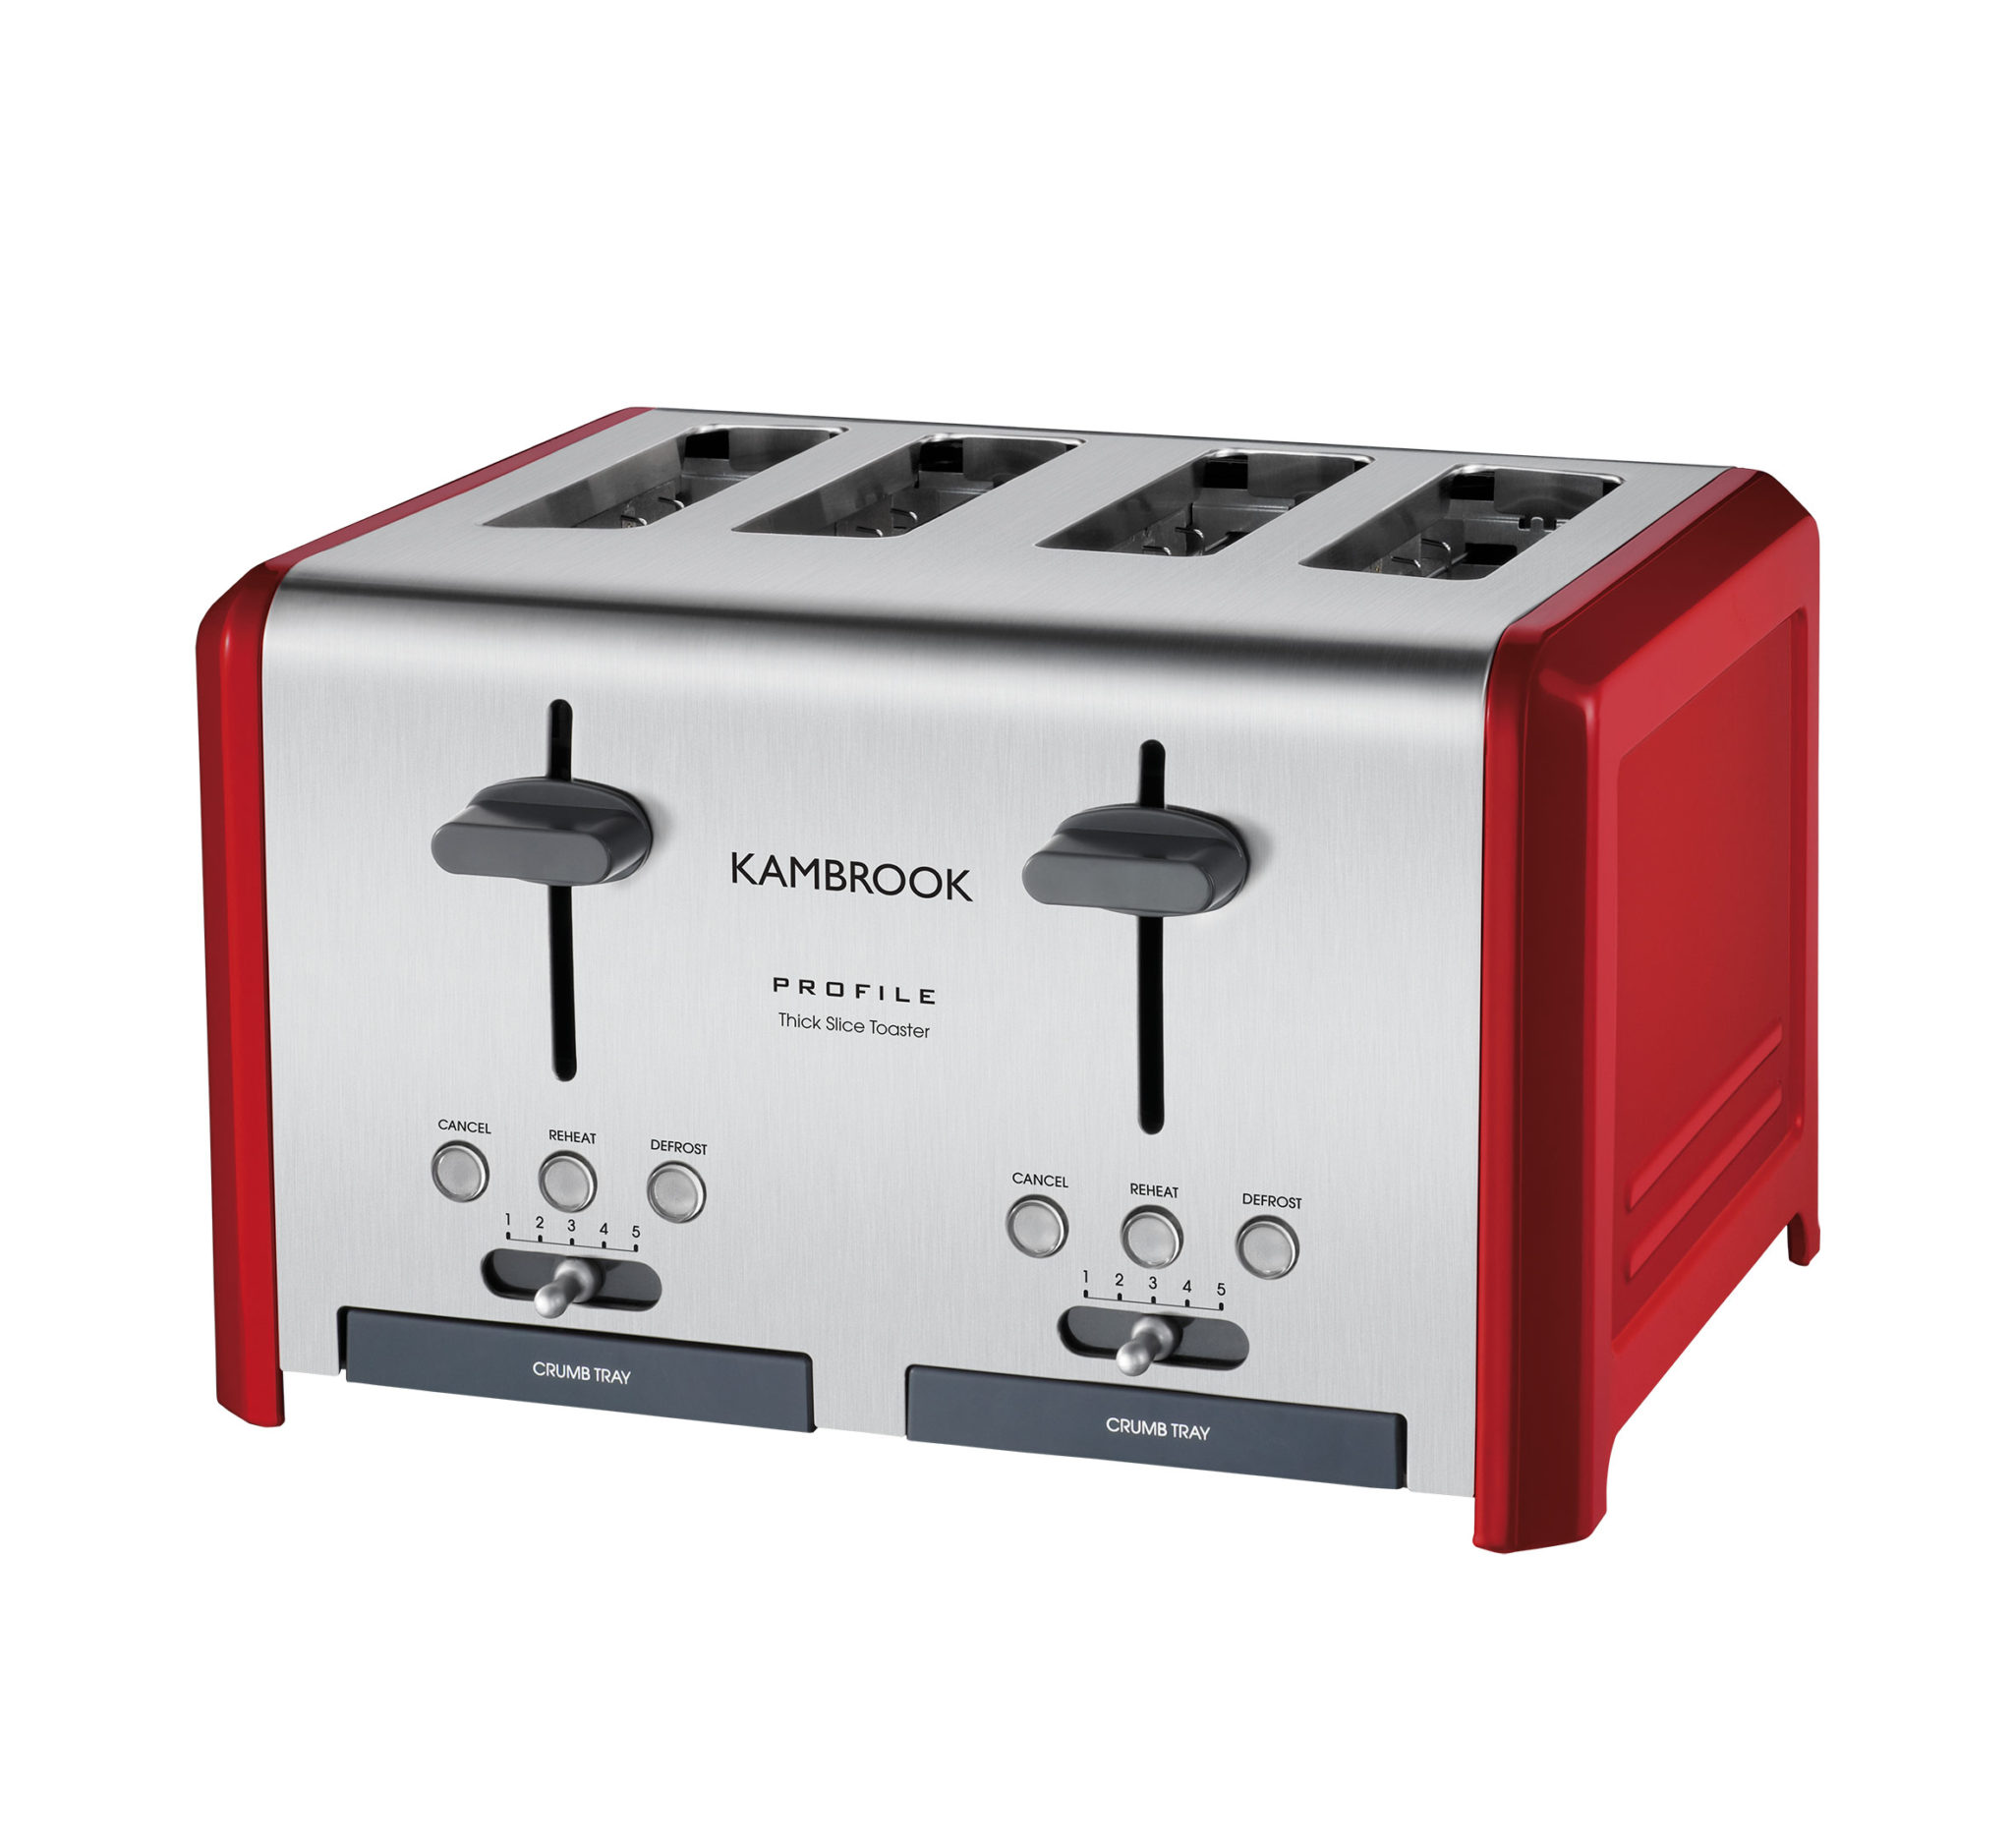 Kambrook red toaster